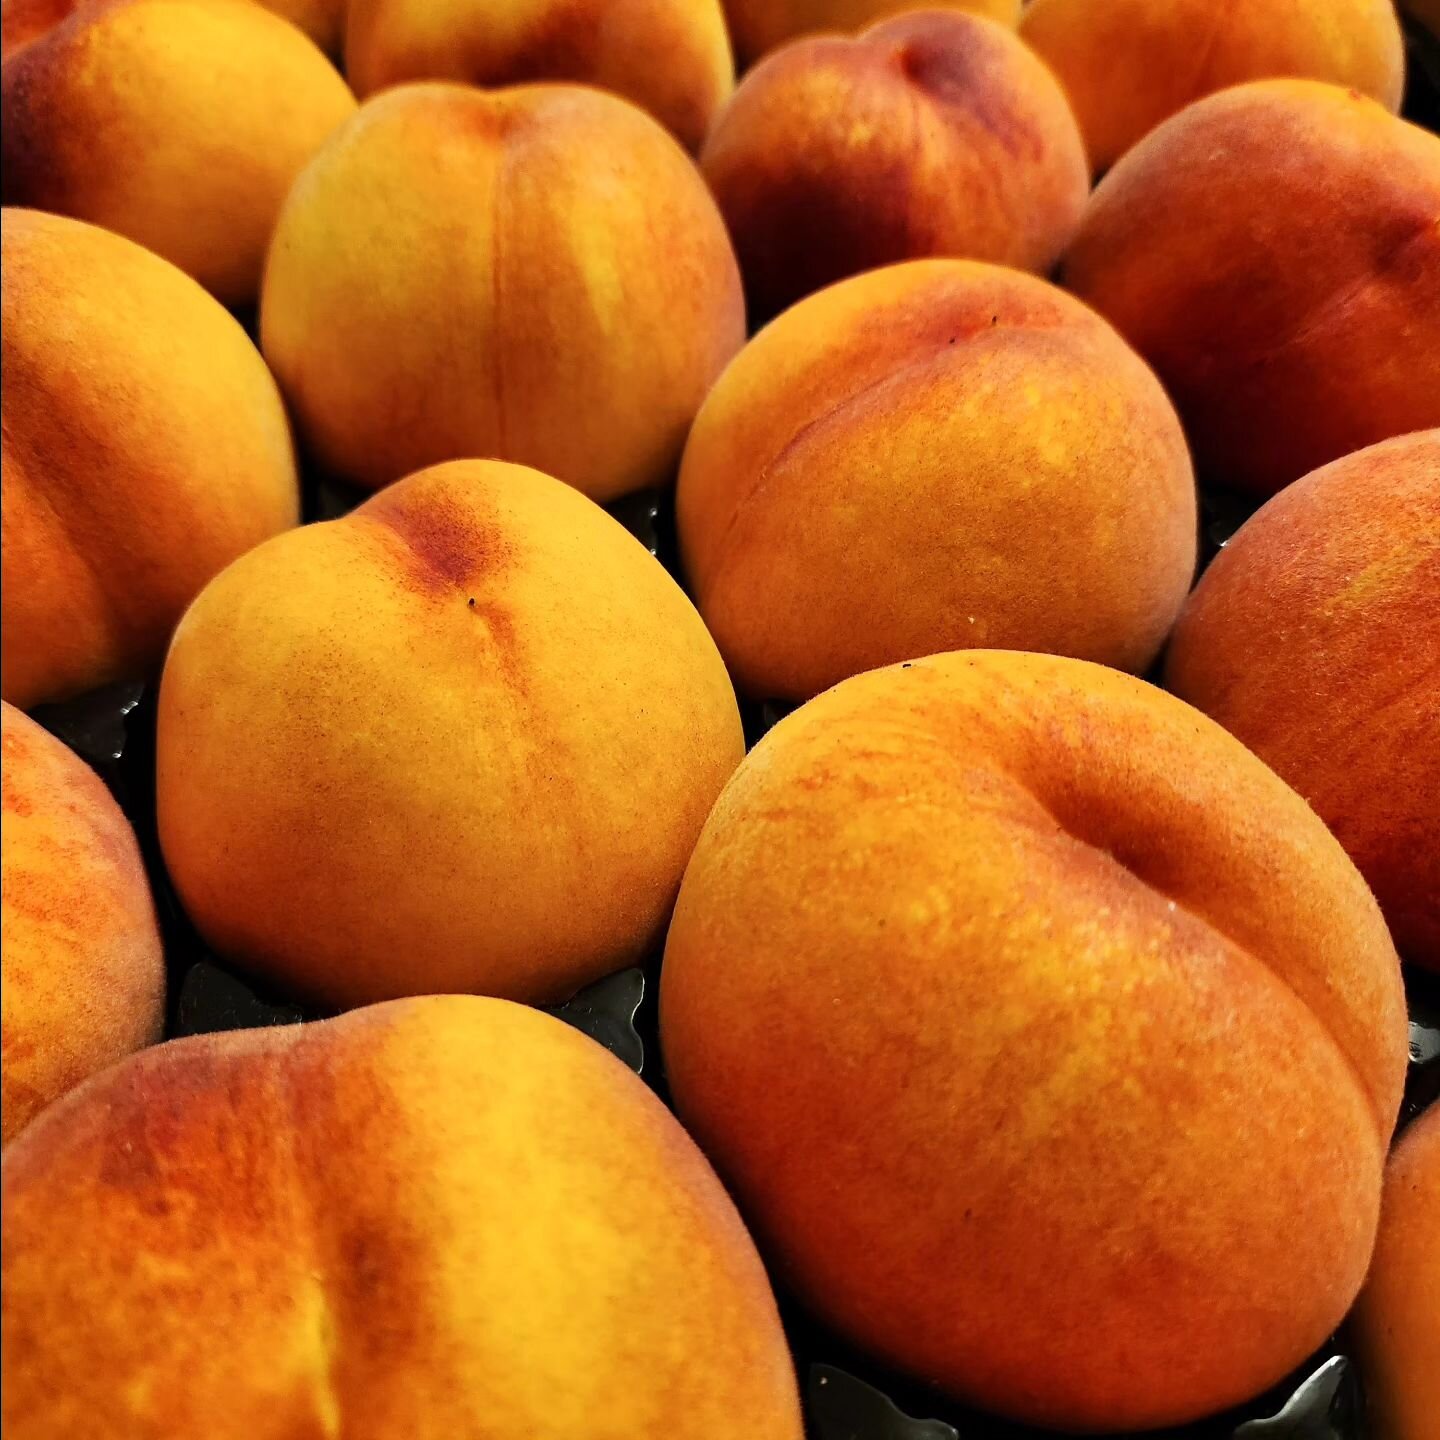 This Saturday, August 19th
We'll be at Spokane &amp; Kootenai Farmer's Markets with beautiful WSDA Certified Organic peaches!
@thespokanefarmersmarket 
@kcfmidaho

#certifiedorganic 
#peaches
#farmersmarket